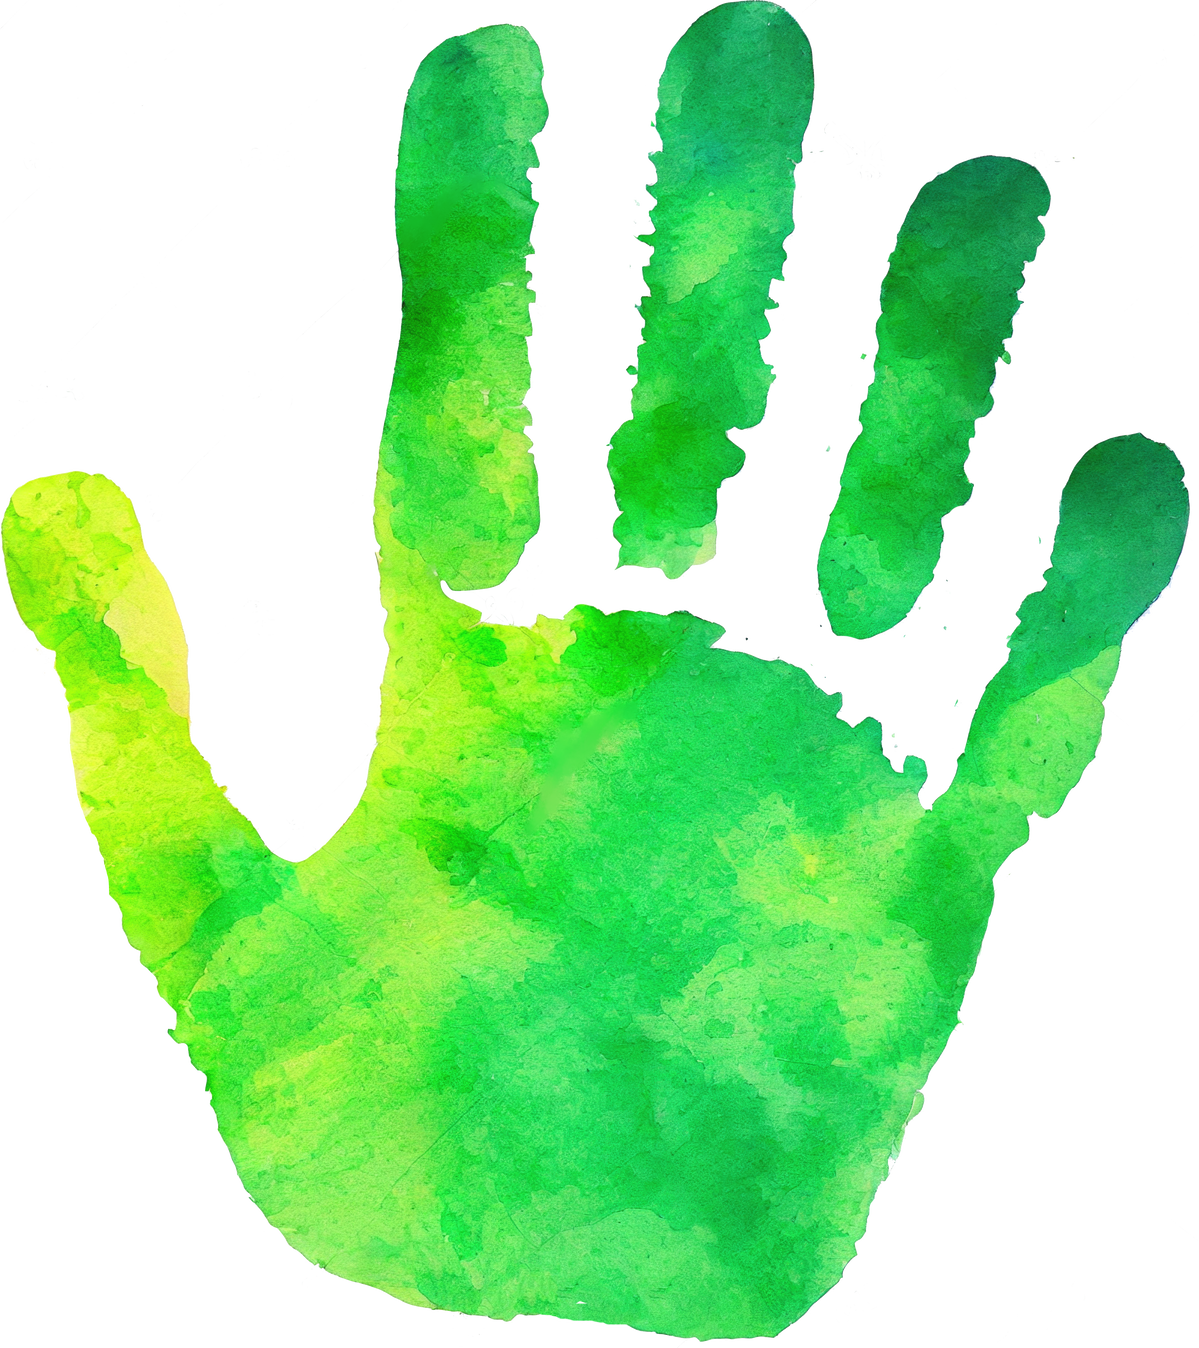 Green Hand Print Watercolor Illustration